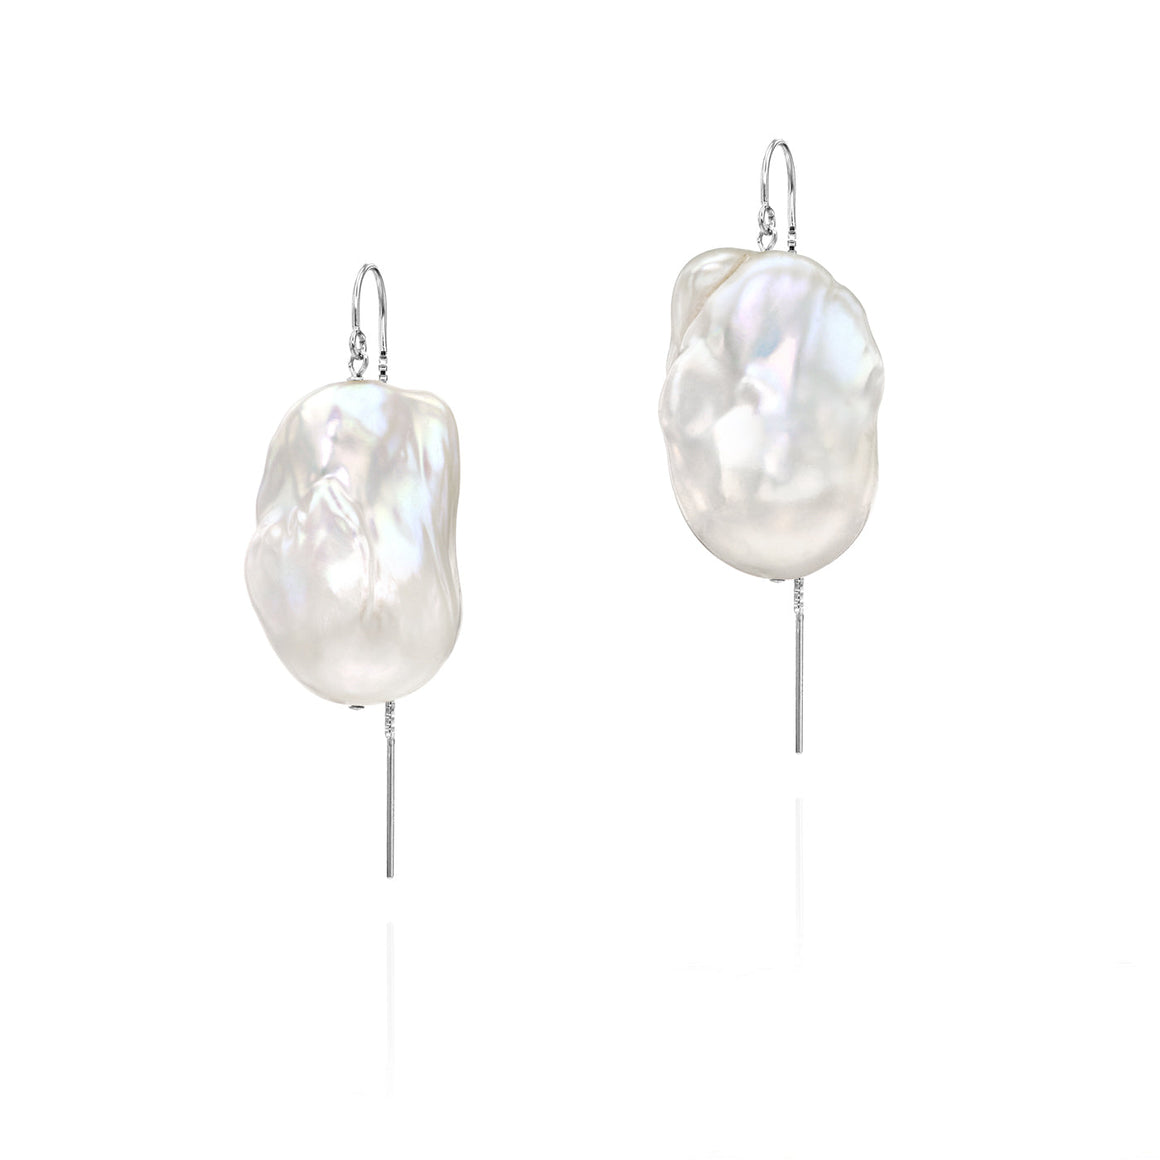 XXL Runway Size 14K White Baroque Freshwater Pearl Drop Threader Earrings 14K White Gold